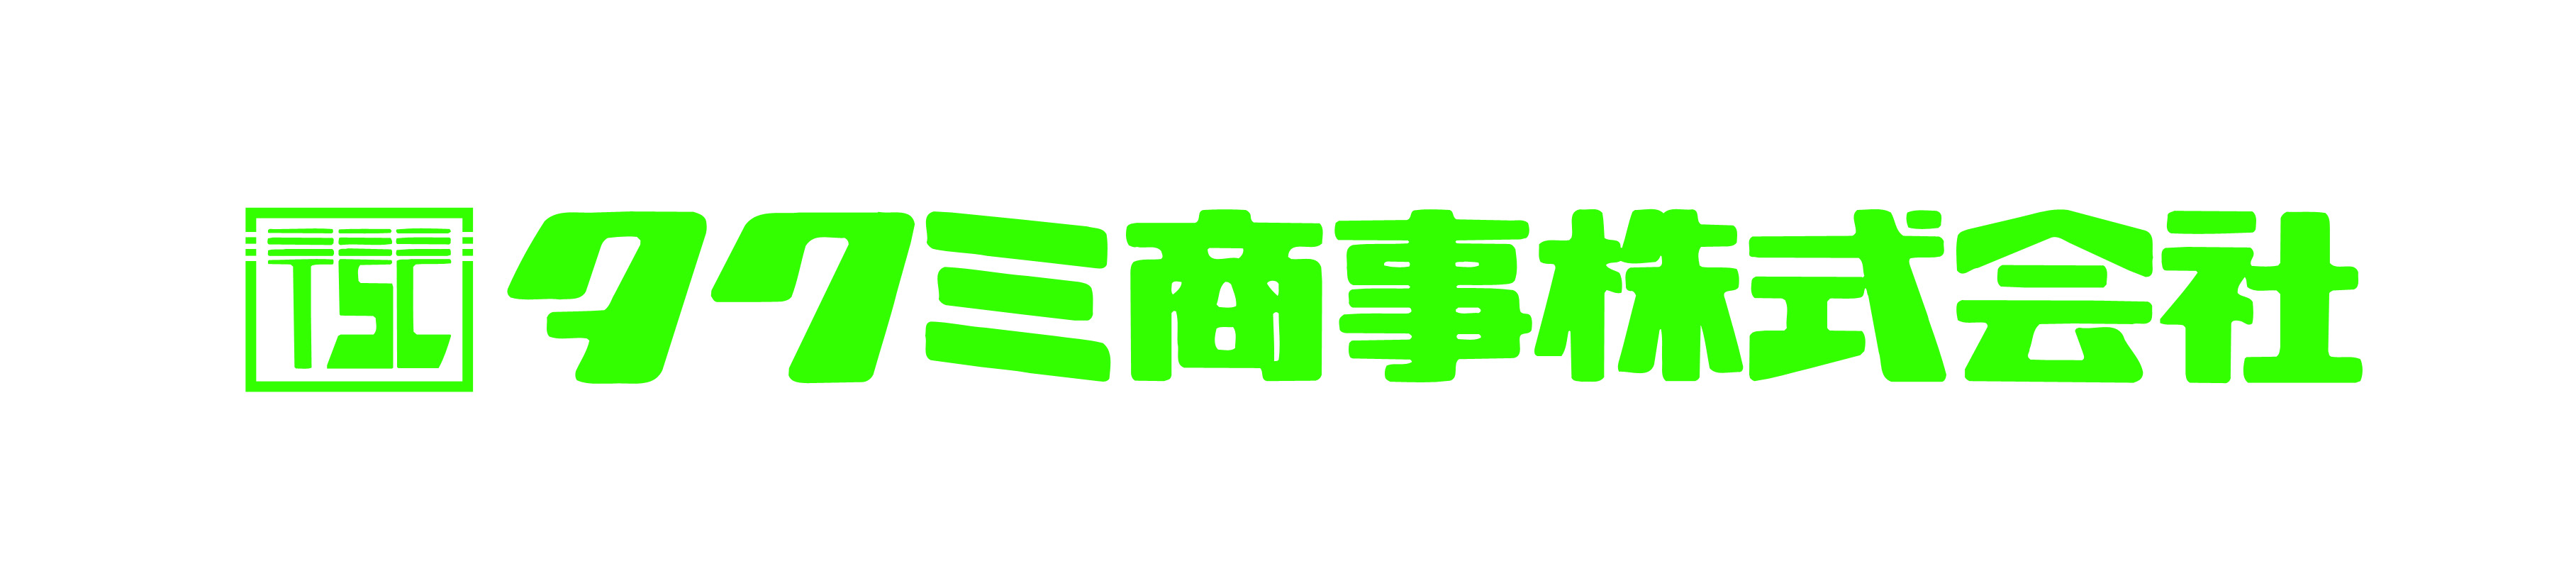 Takumi logo